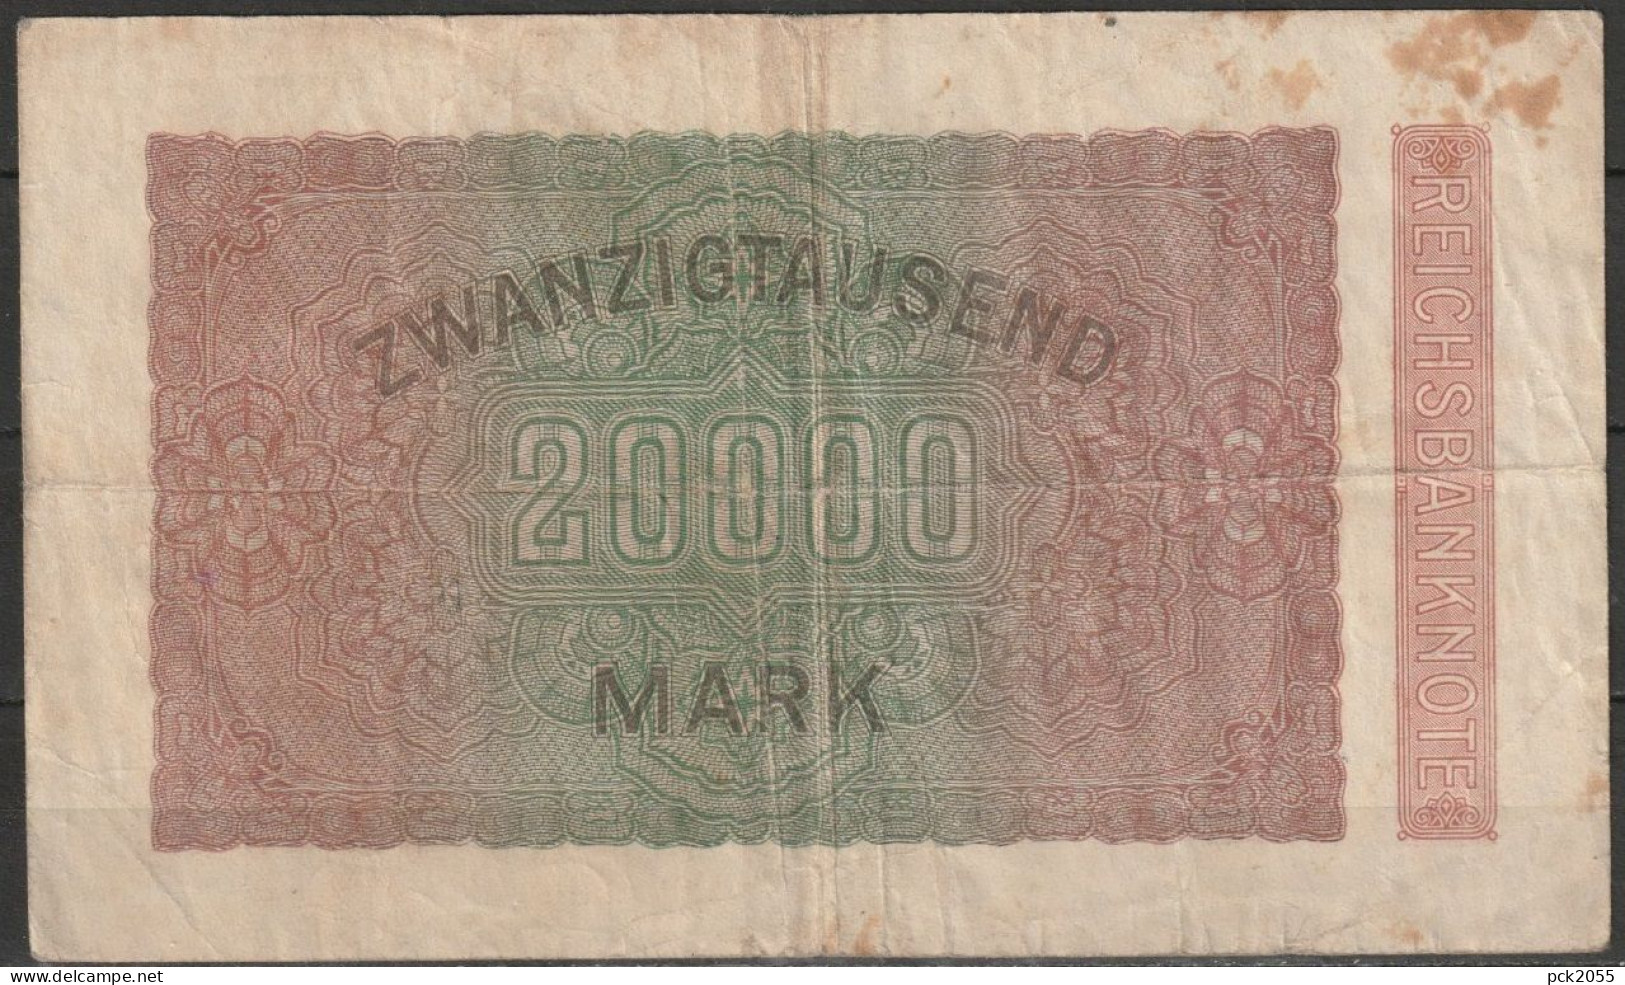 DR.20000 Mark Reichsbanknote 20.2.1923 Ros.Nr.84b, P85 ( D 6737 ) - 20000 Mark